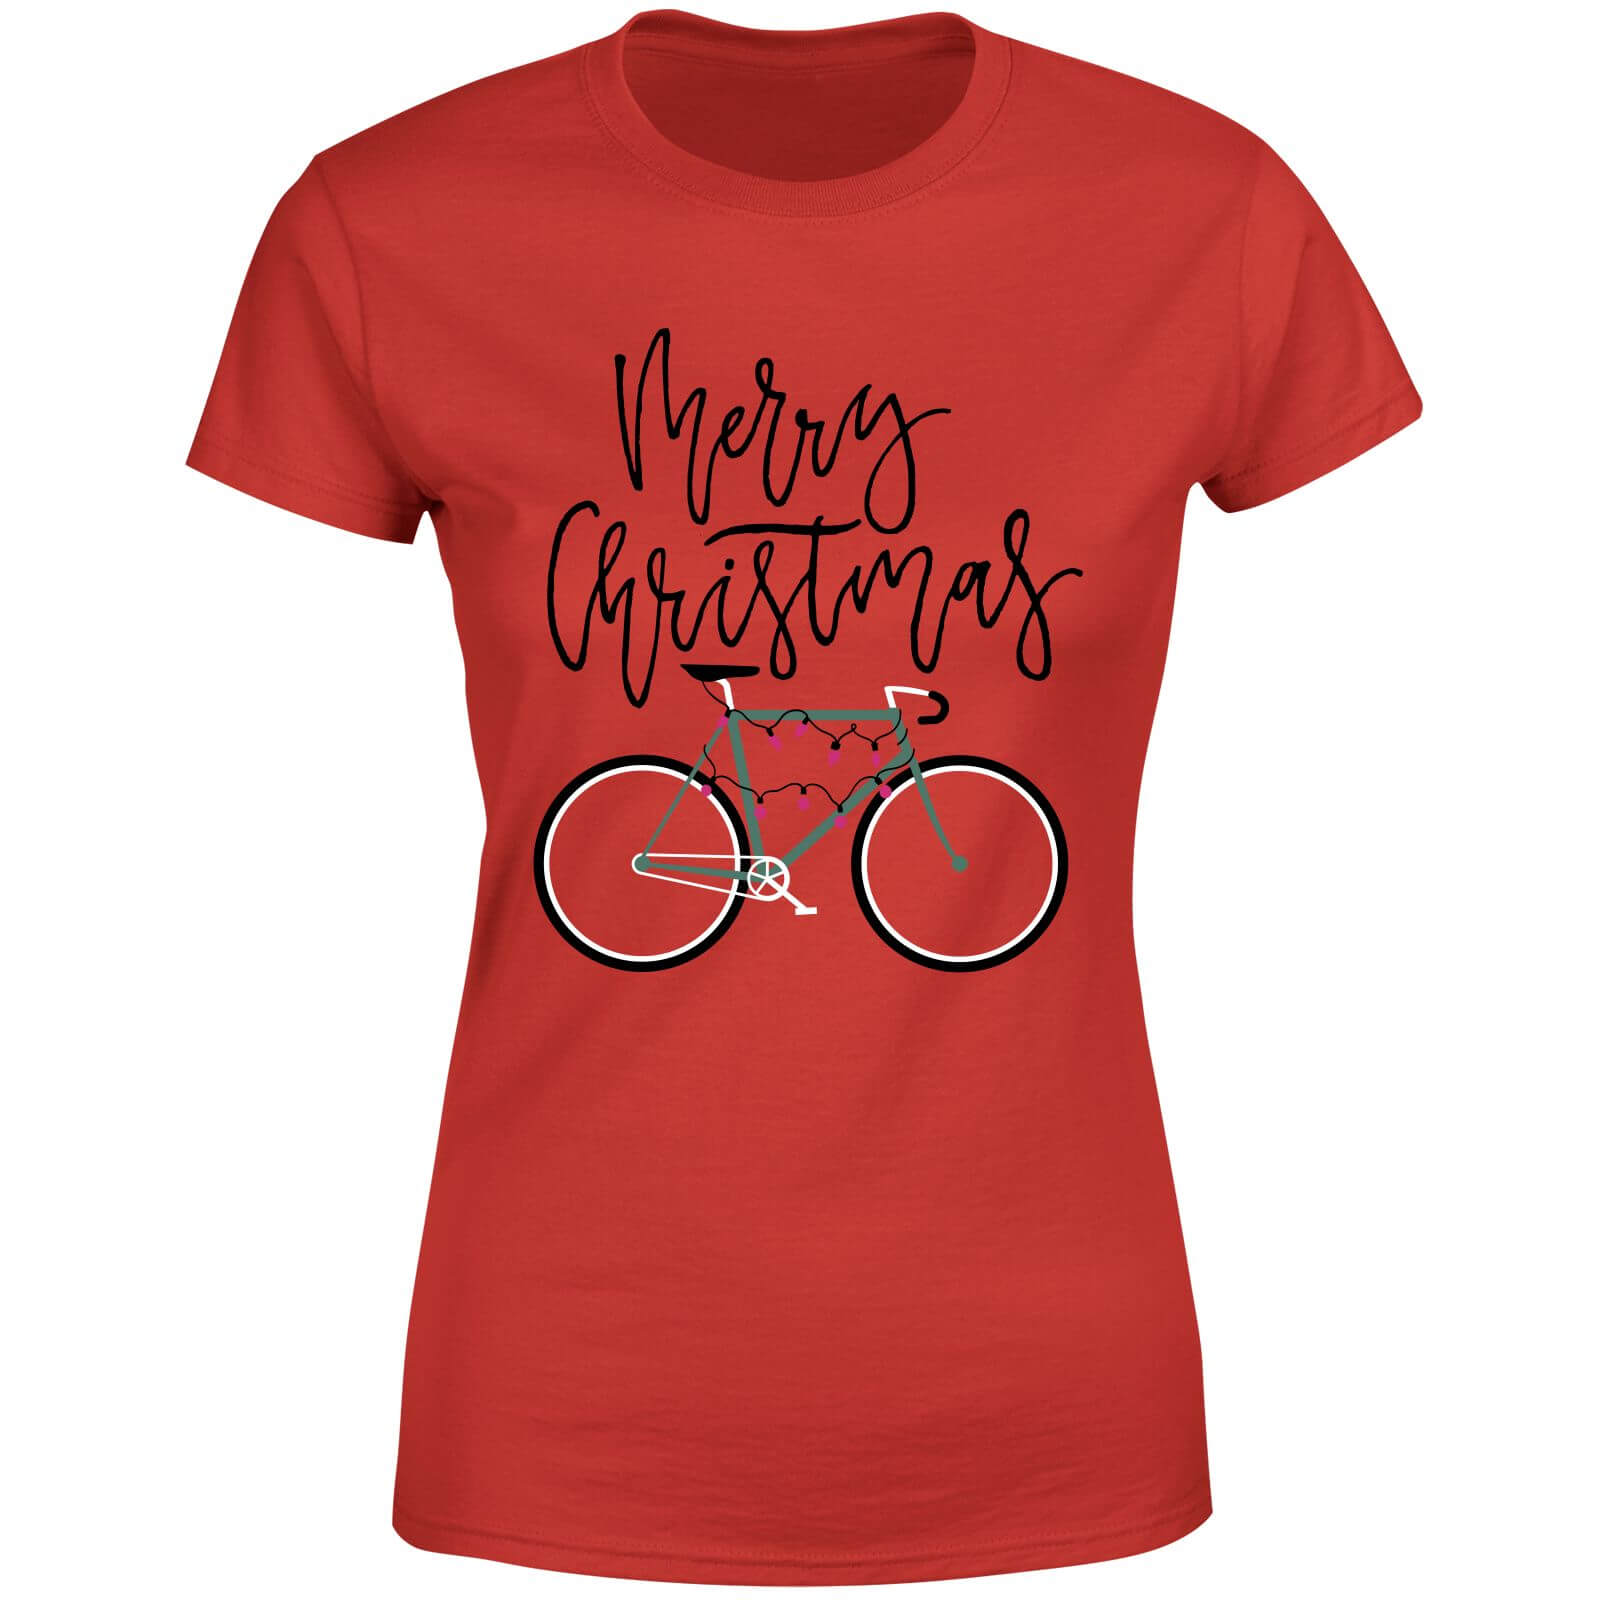 Bike Lights Women's Christmas T-Shirt - Red - L